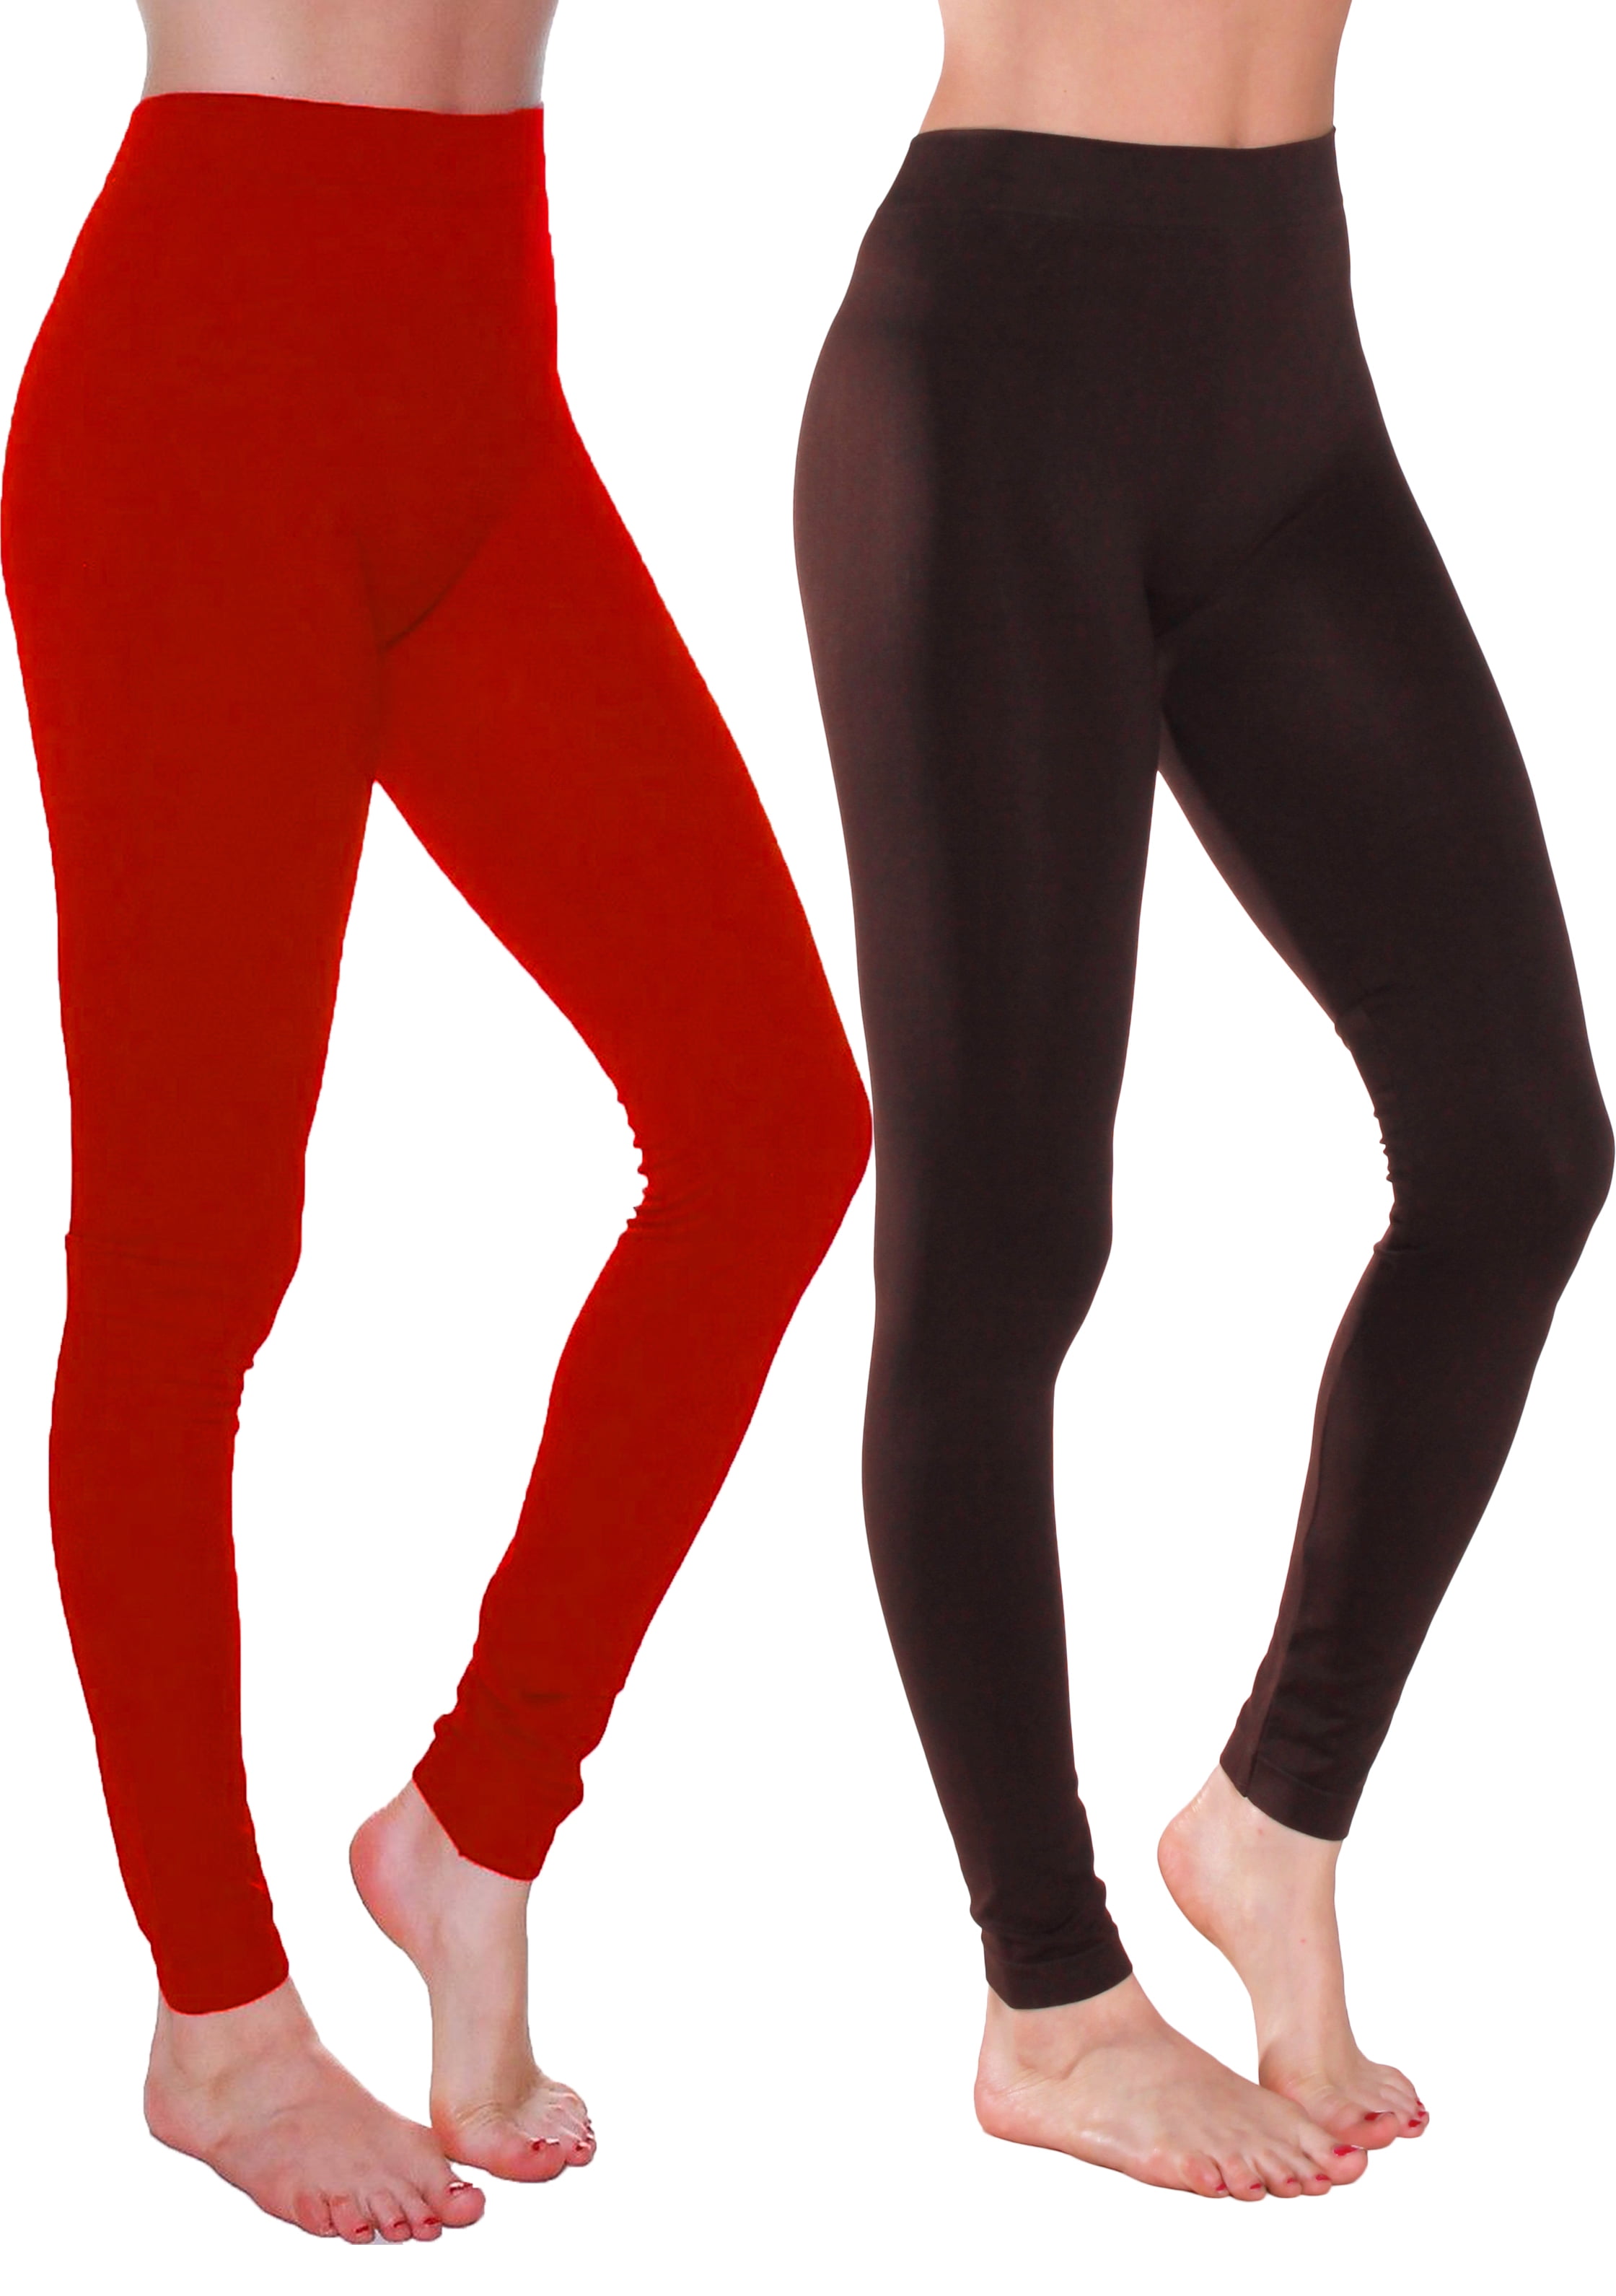 Terra & Sky Women's Plus Size Fleece Lined Holiday Print Leggings, 2-Pack 